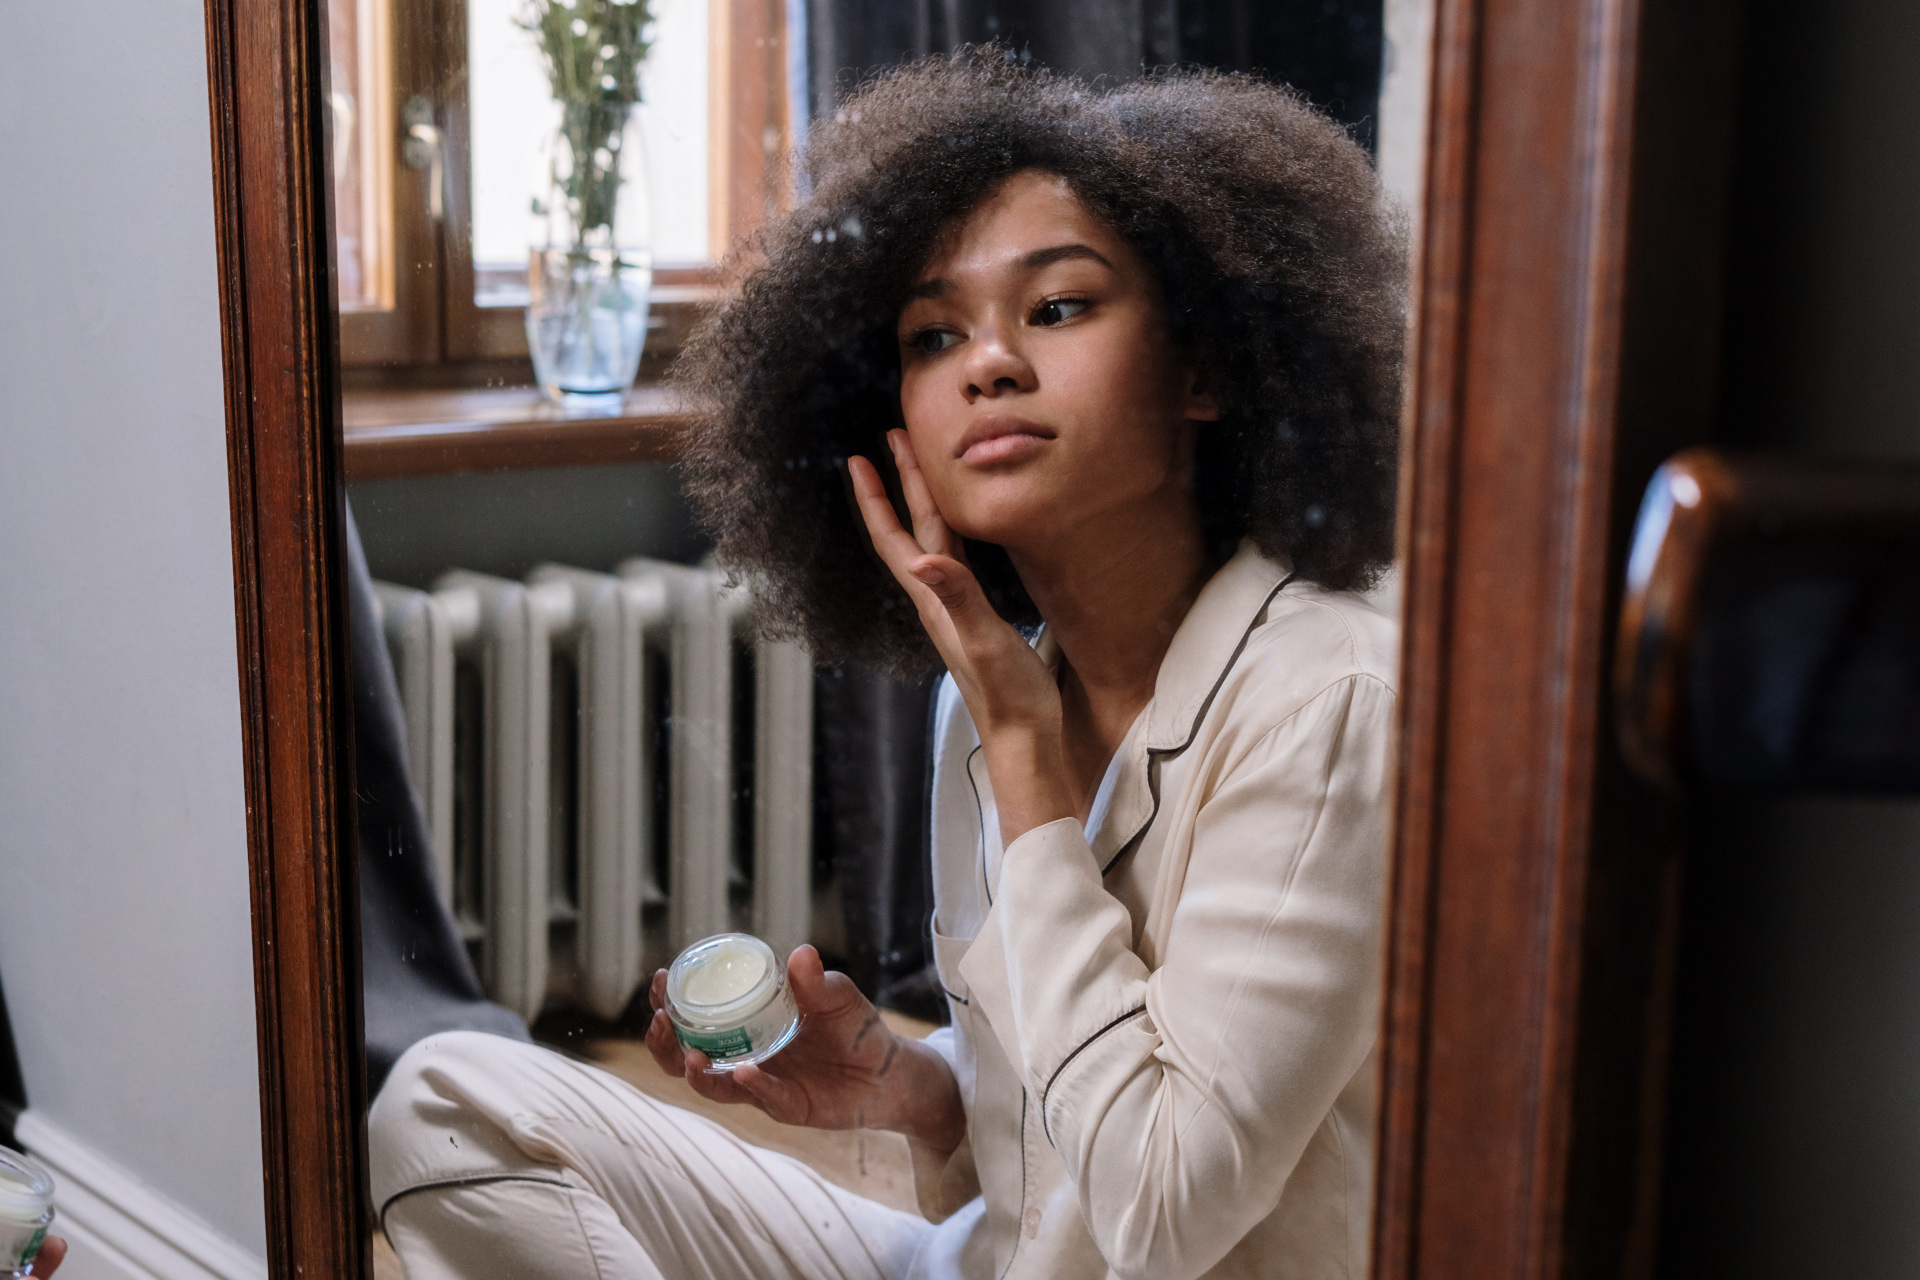 Black woman applying face cream in mirror